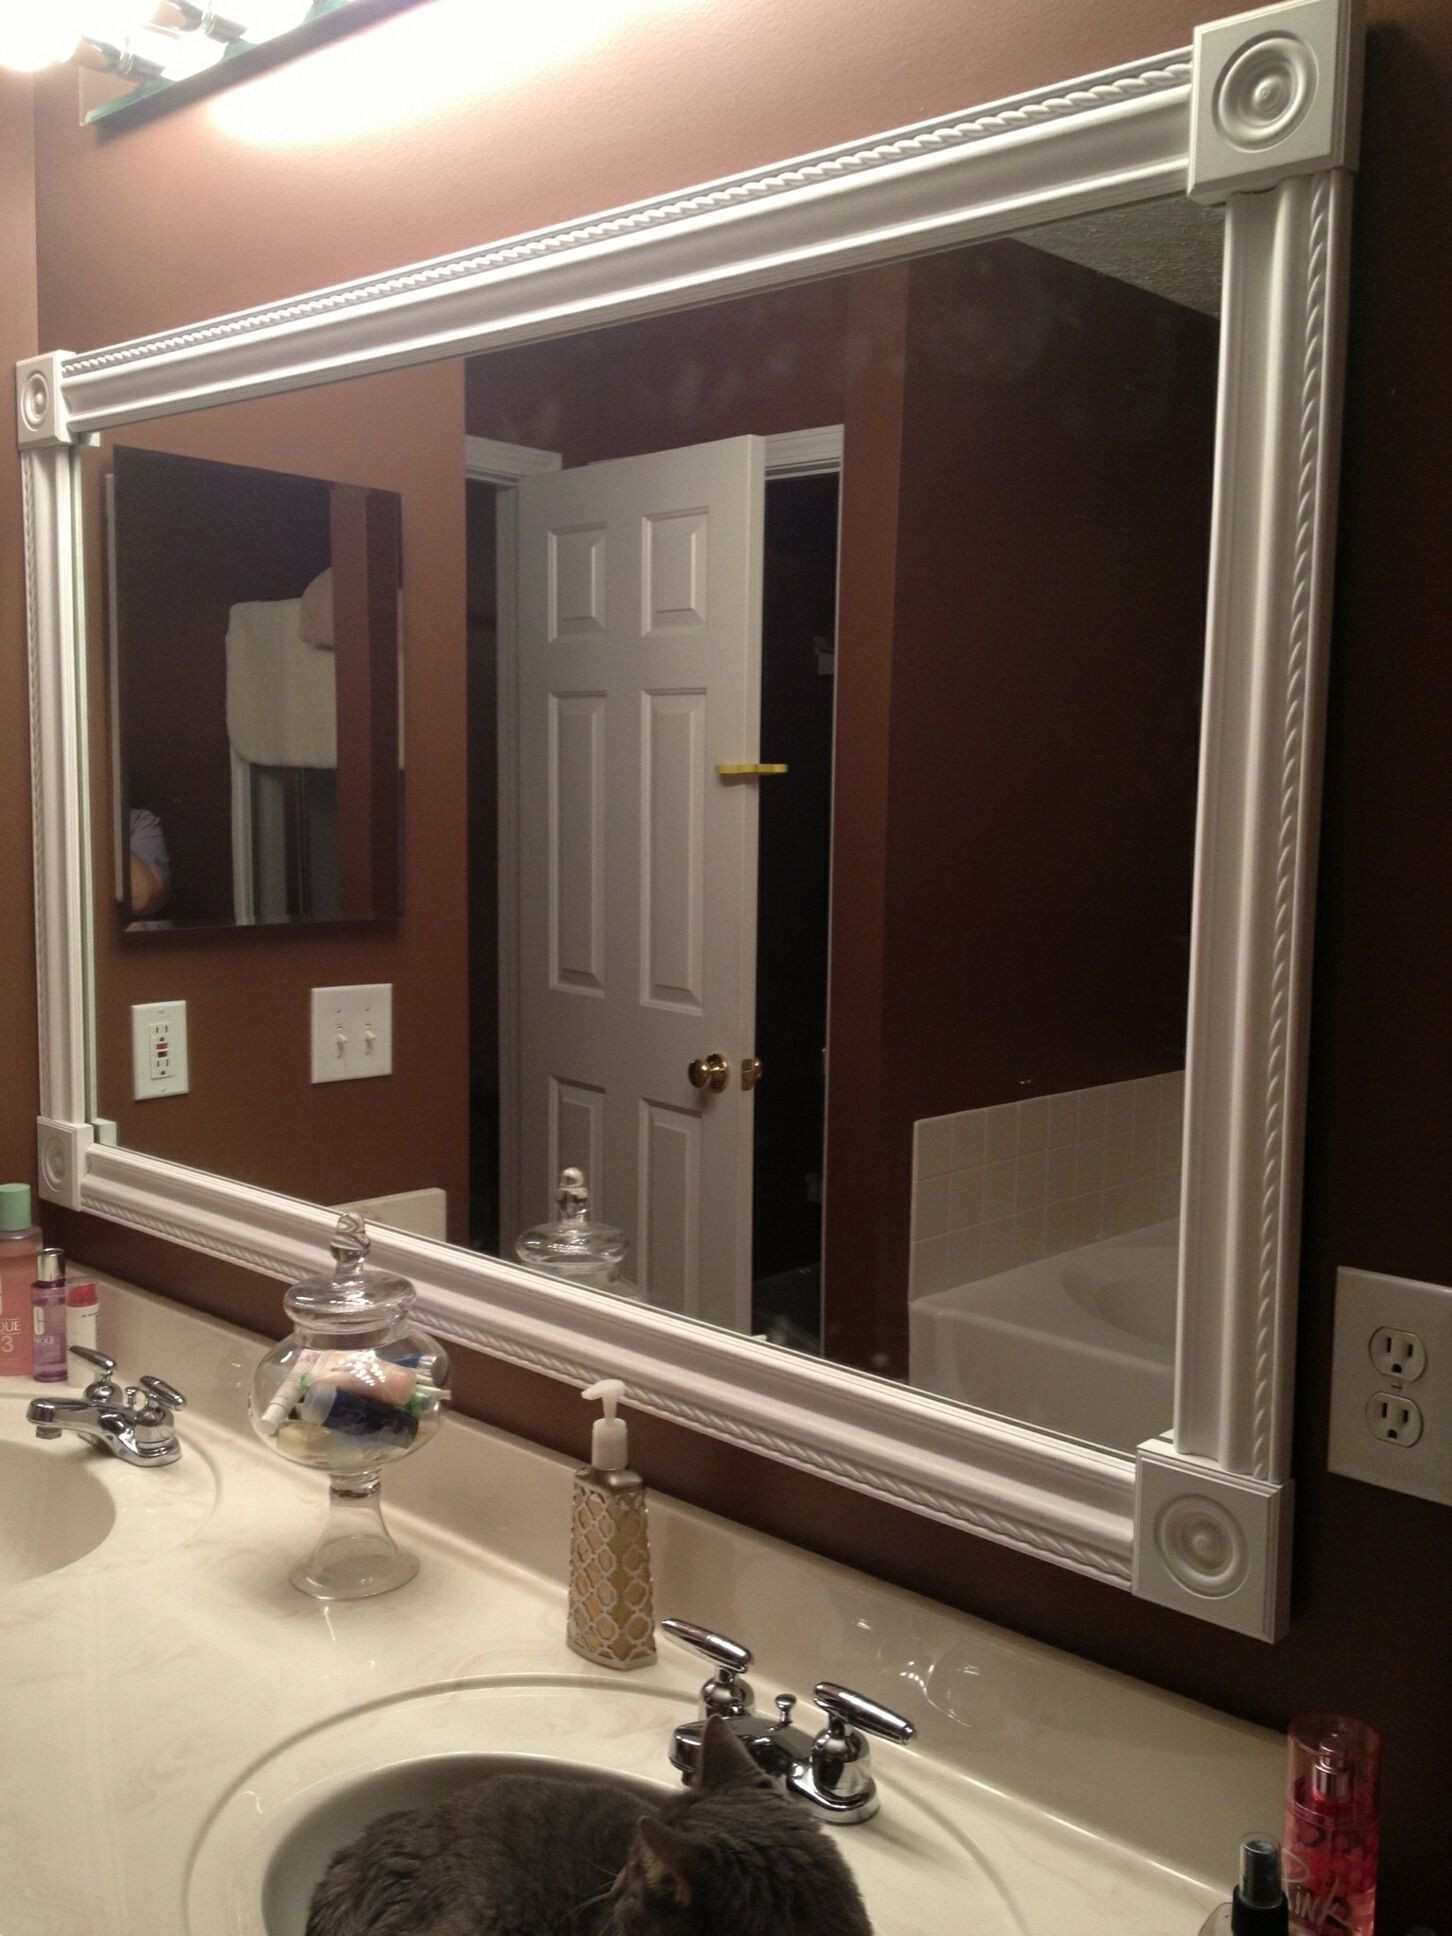 Framed Bathroom Mirror Ideas
 Tips to Choose a Bathroom Mirror